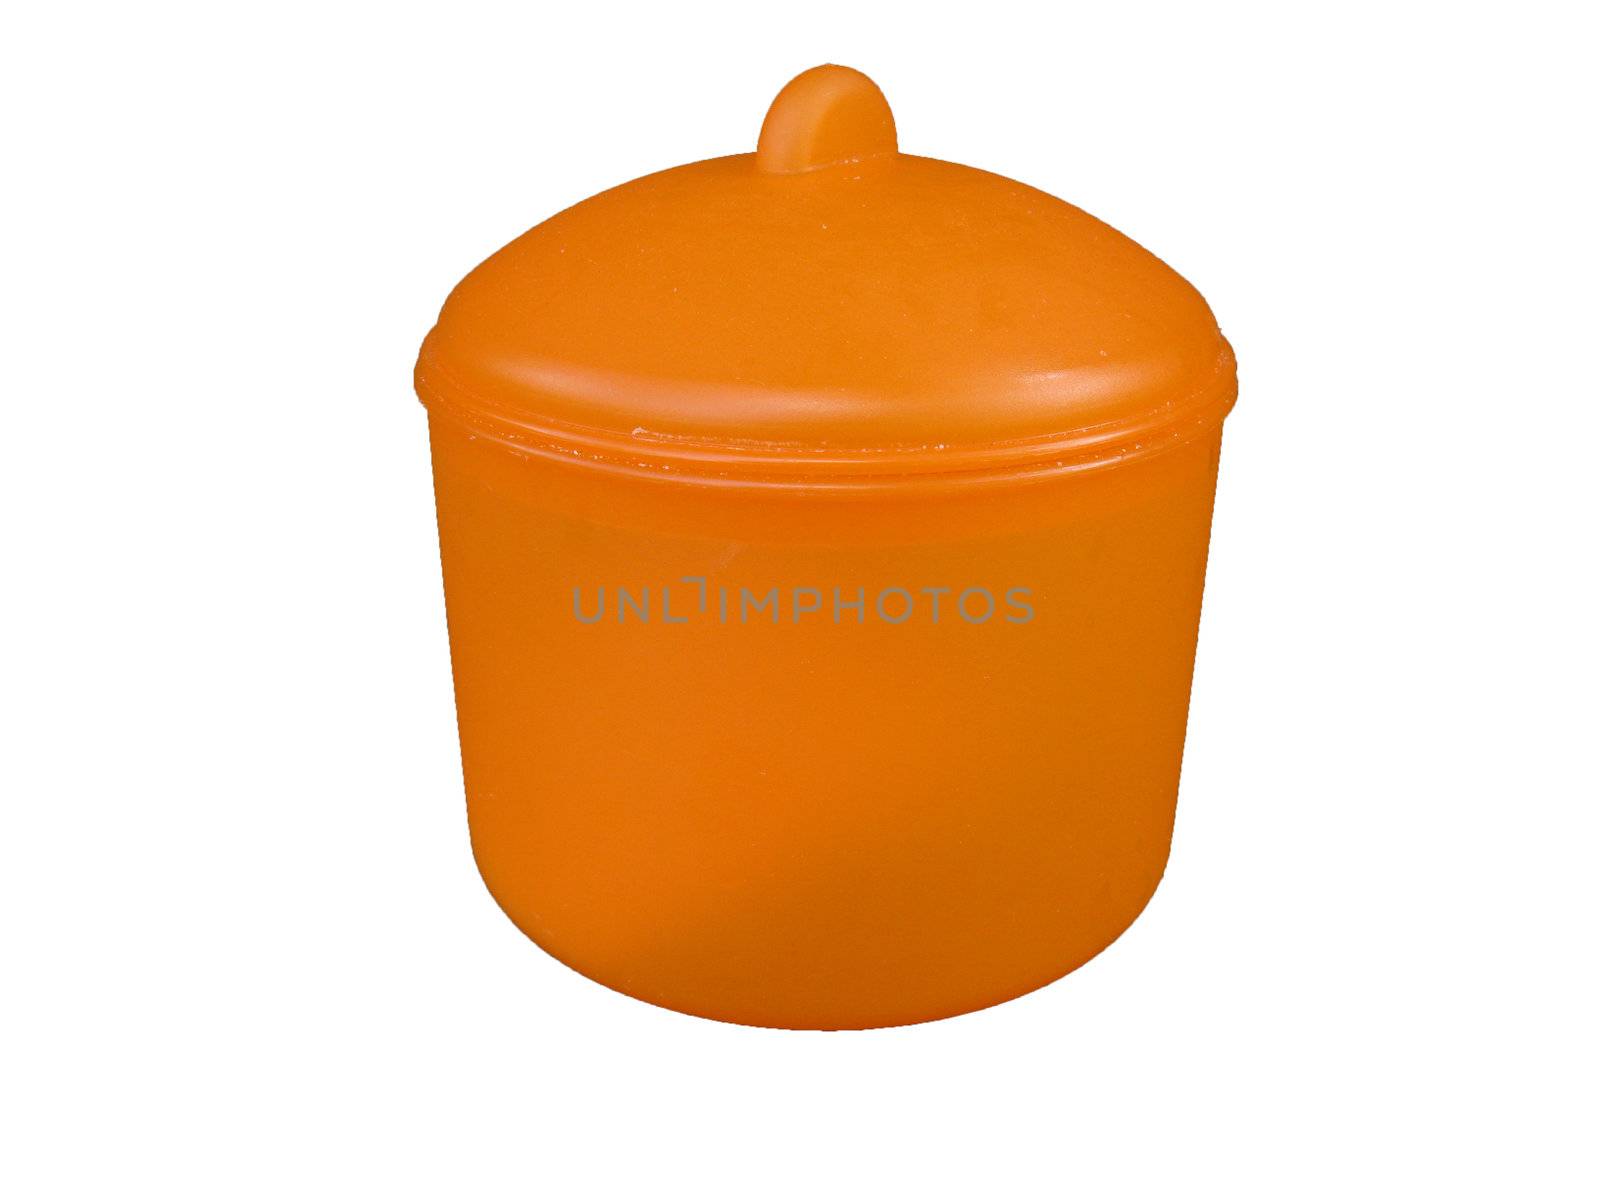 Orange, round pot on a white background